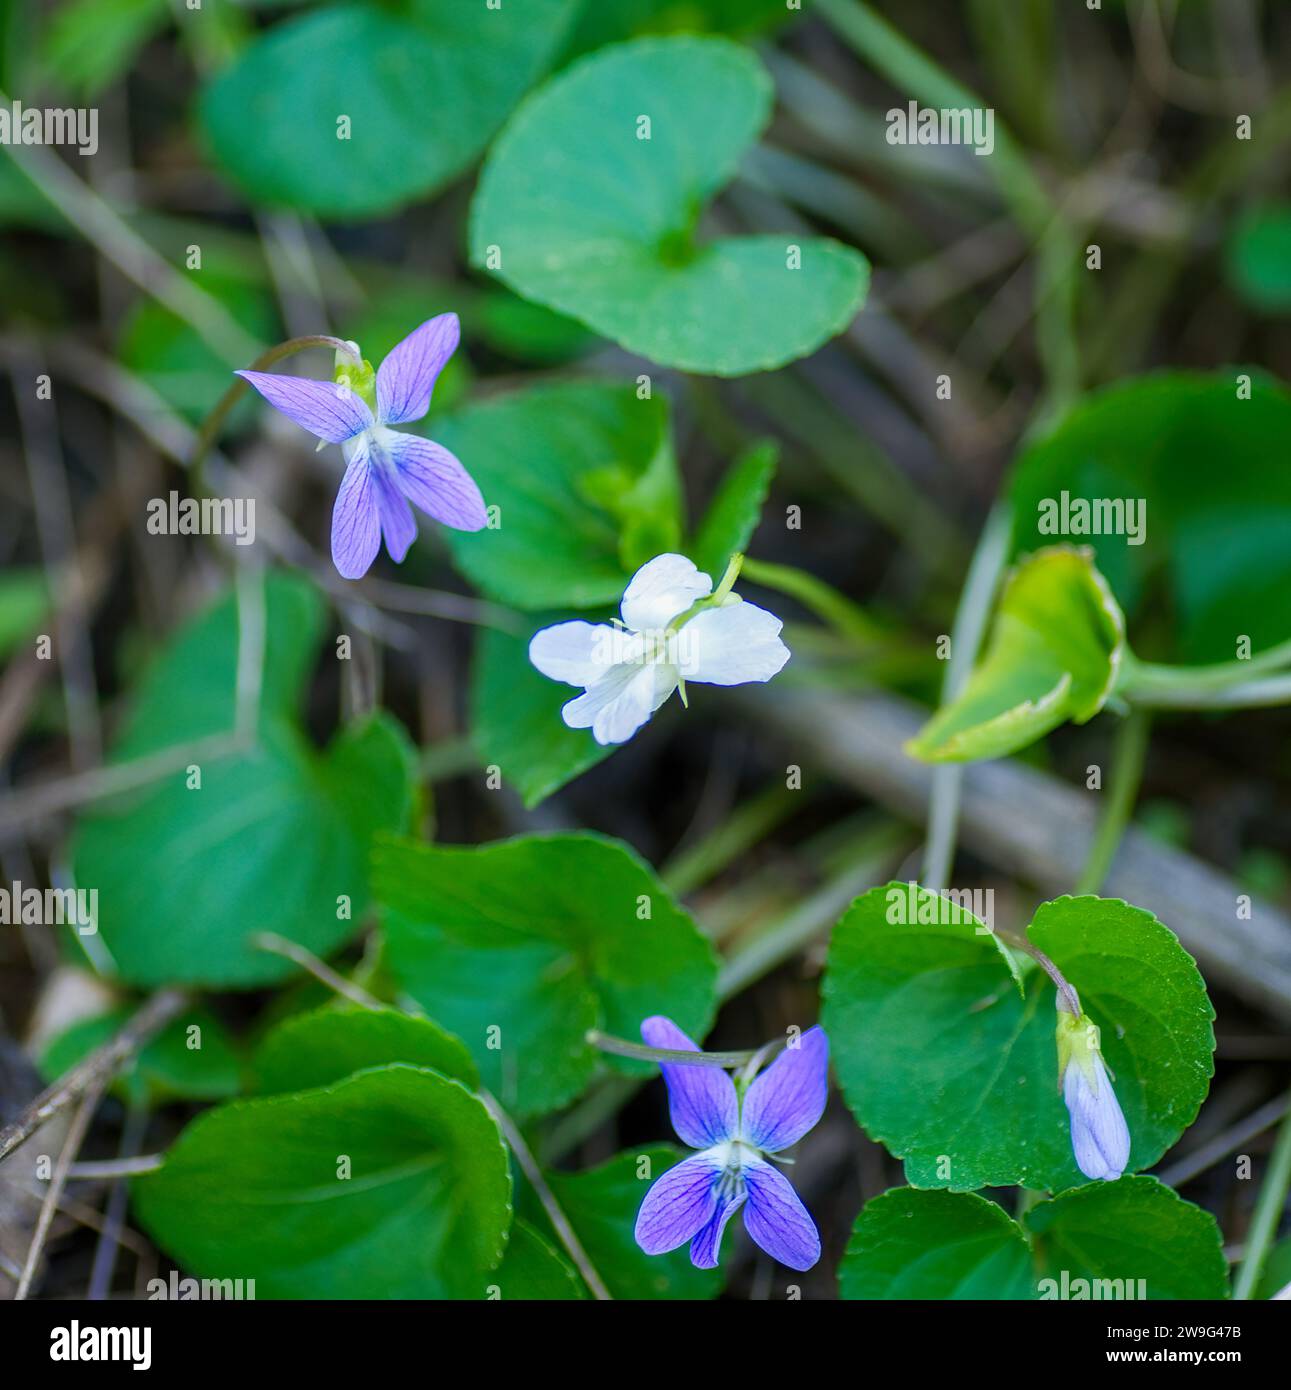 Wild Florida violet - Viola floridana - or Viola Sororia - purple blue color flower, bloom or blossom with dark green heart shaped leaves Stock Photo